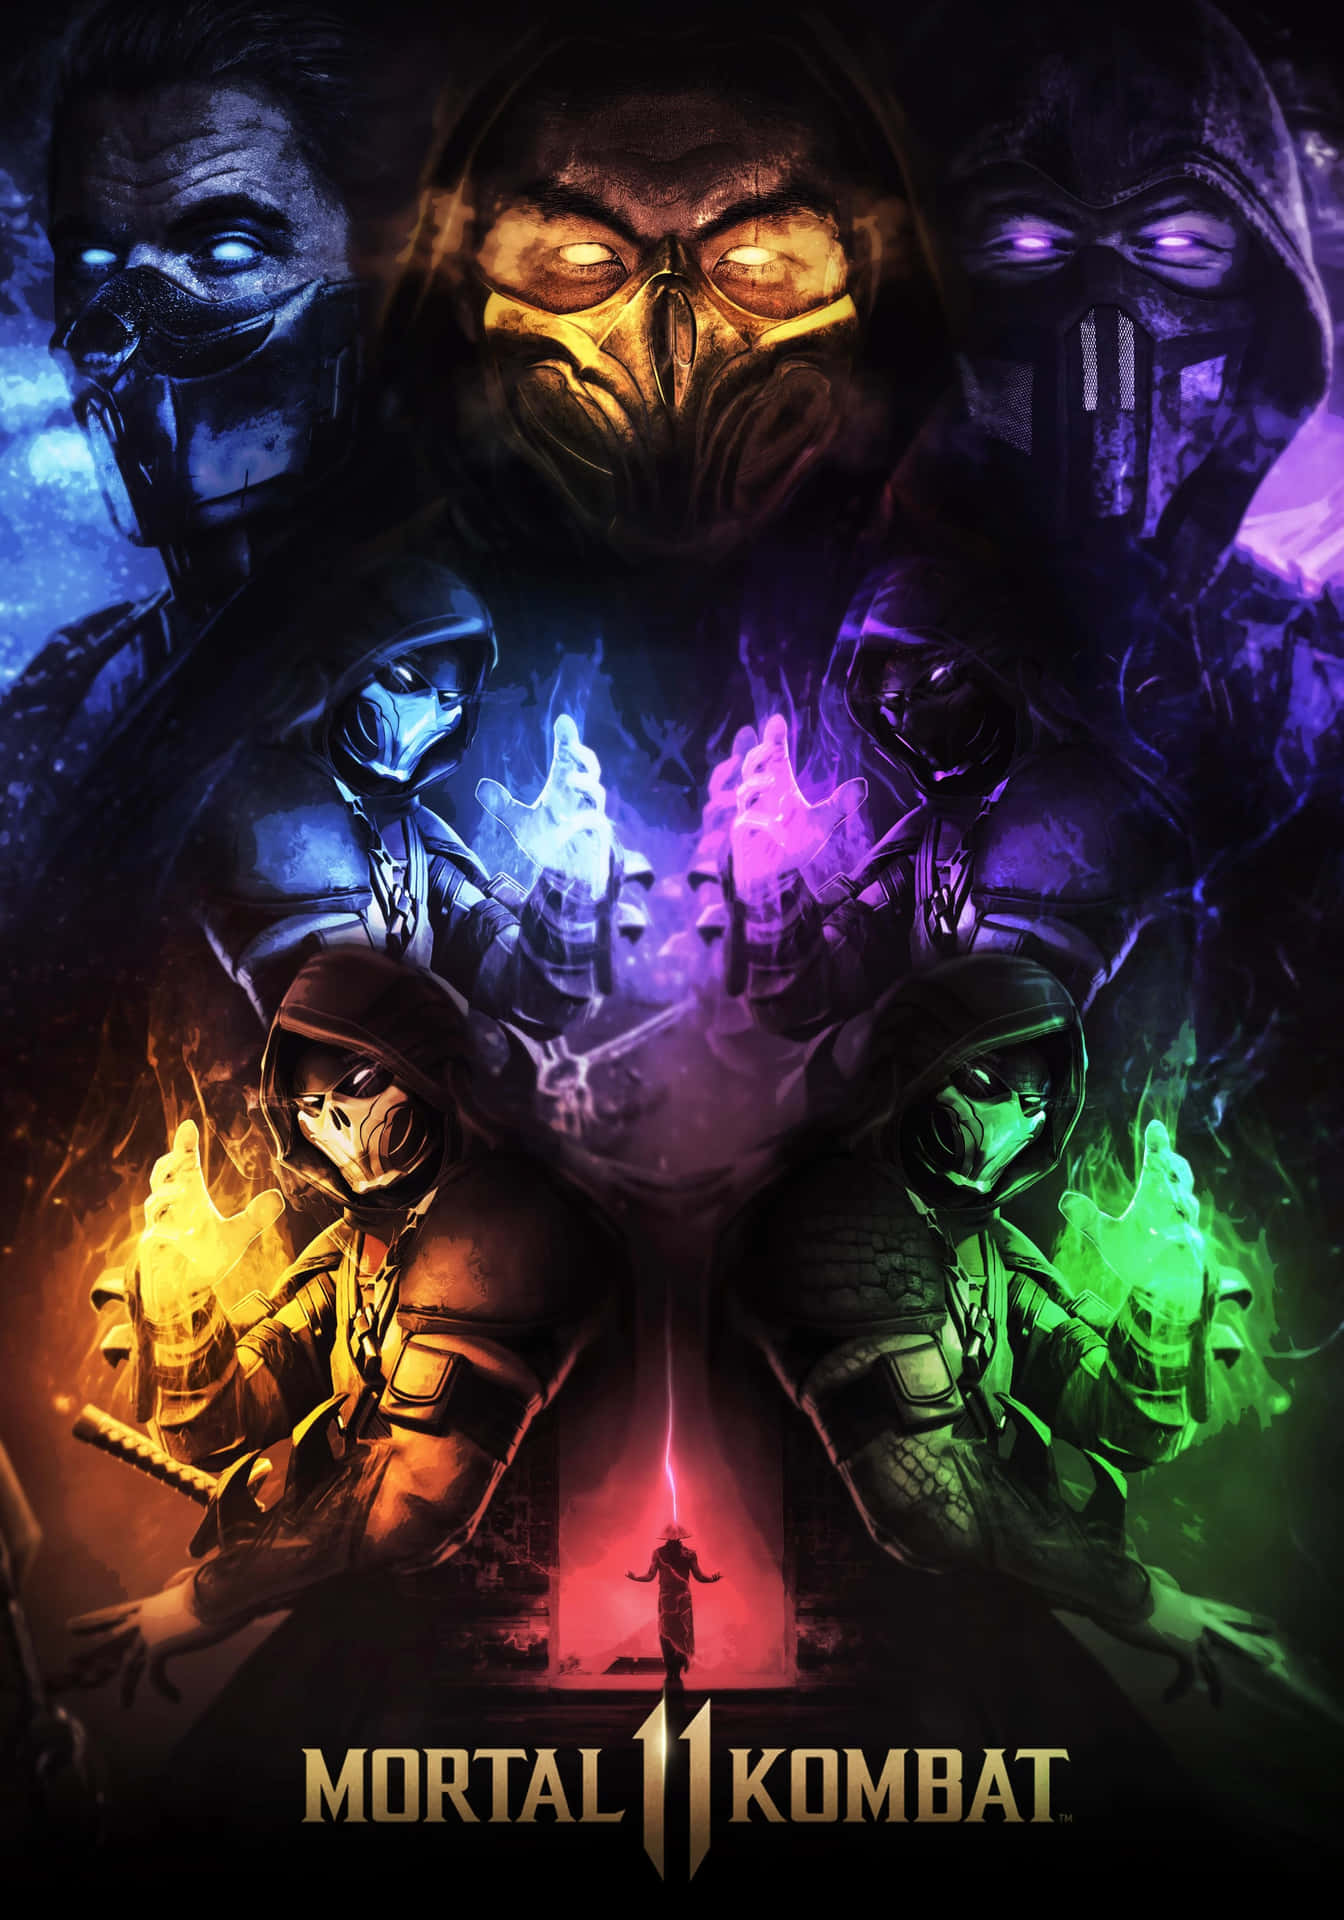 Sub-Zero battles Scorpion in the epic Mortal Kombat video game